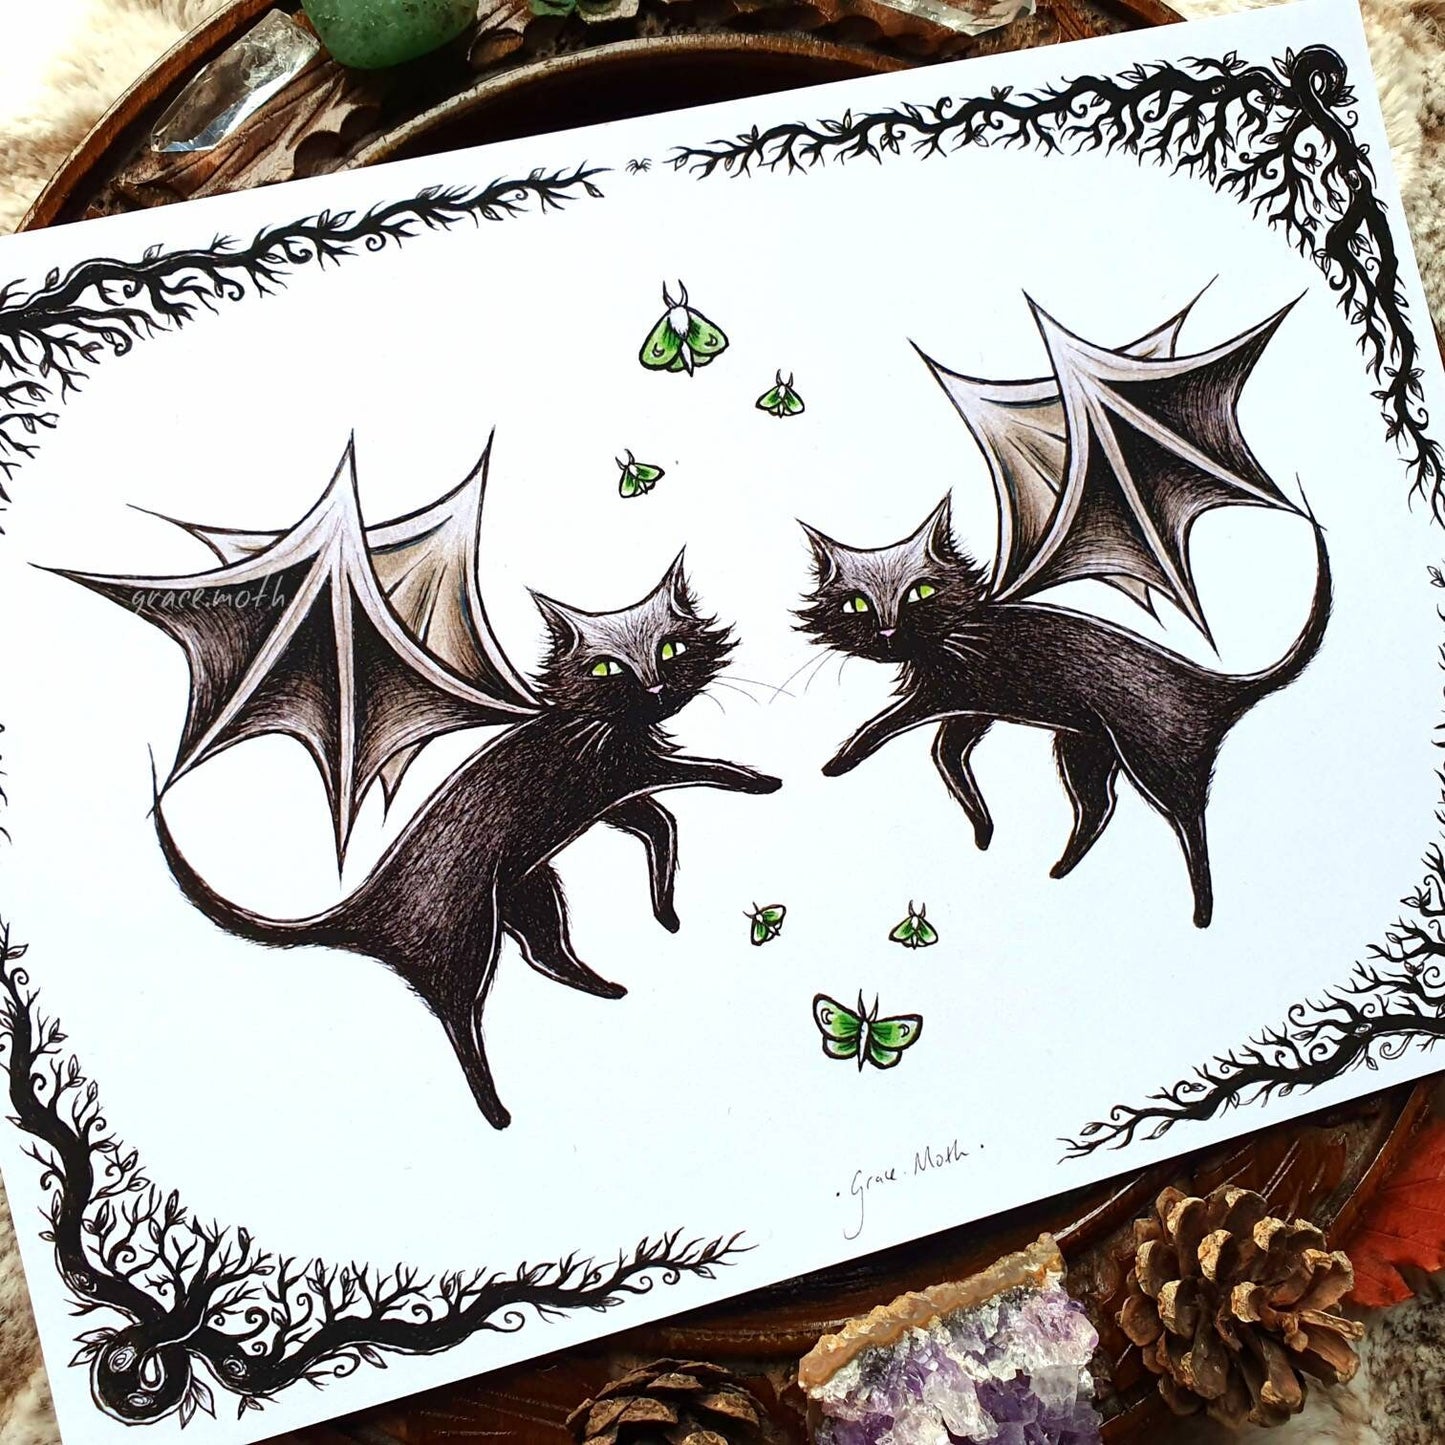 Cat Bats - A5 art print by Grace Moth - 5.8 x 8.3